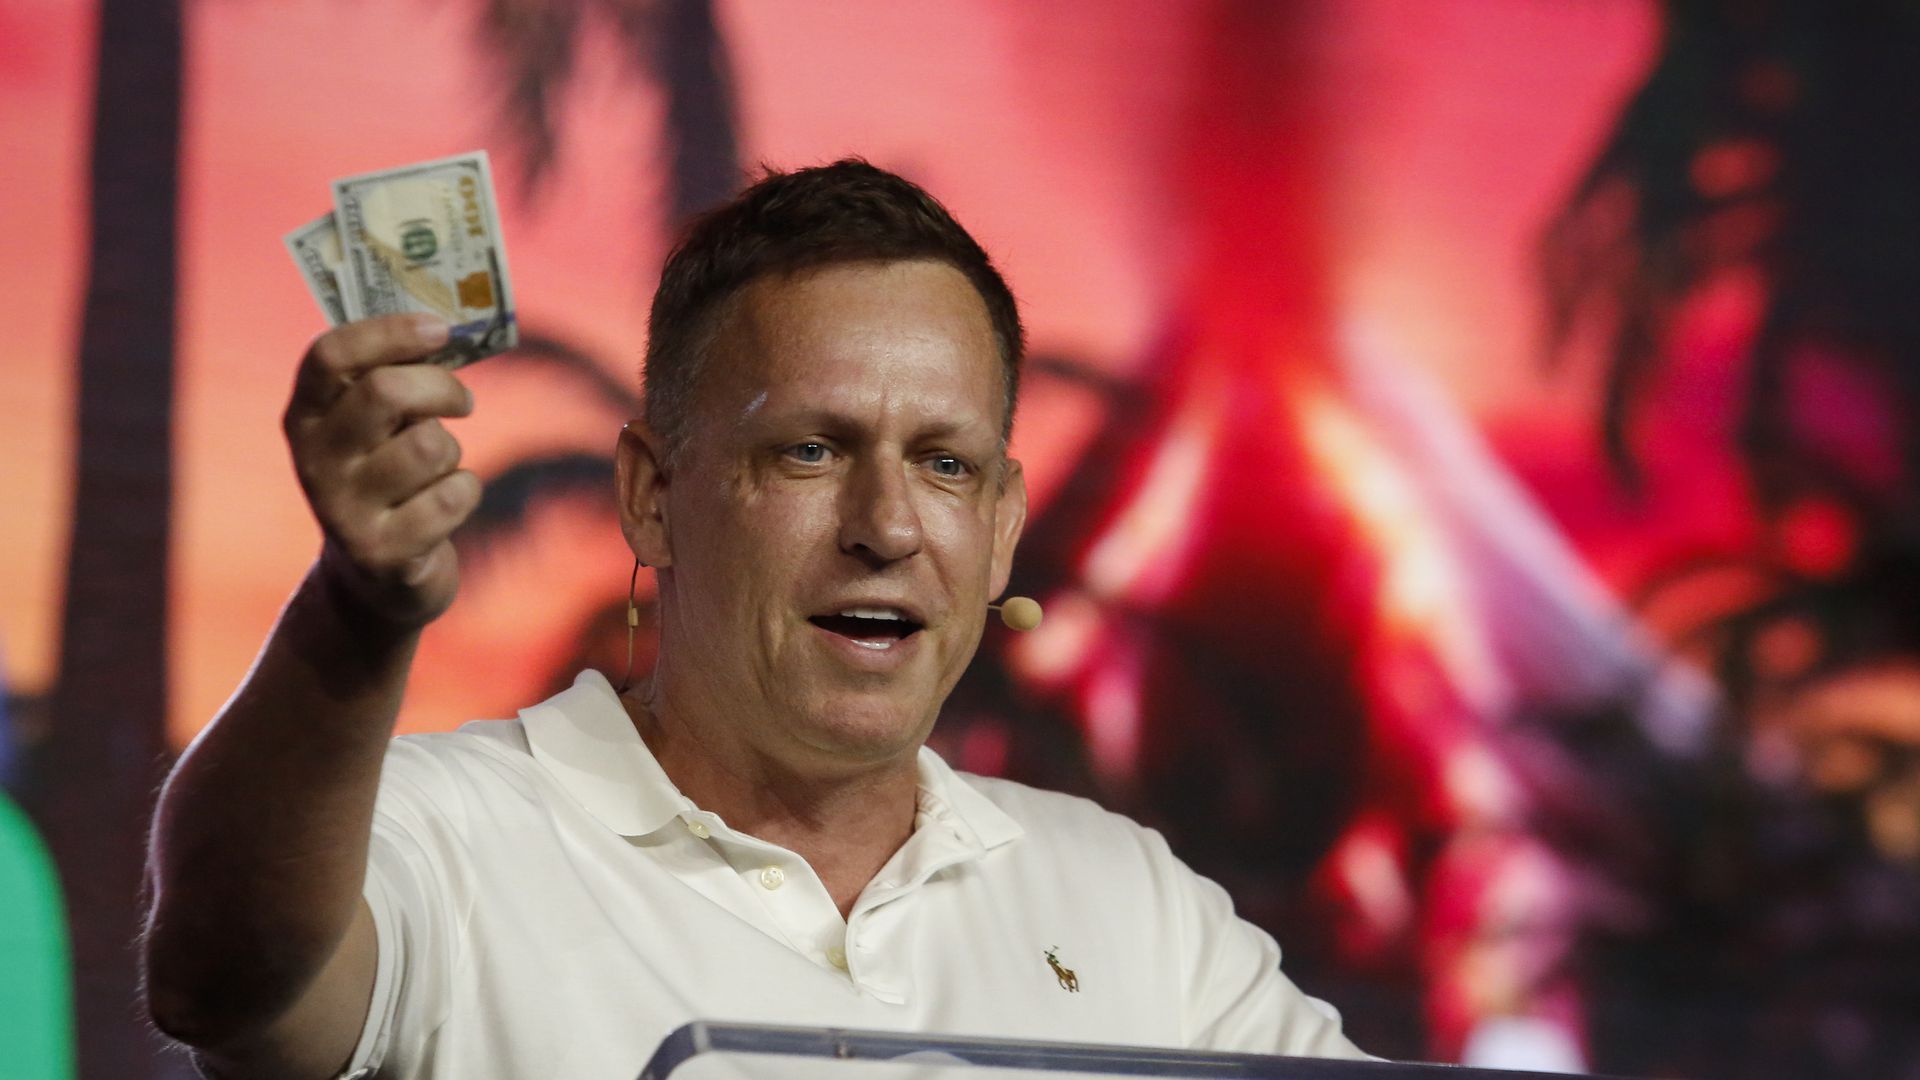 Peter Thiel holding $100 bill